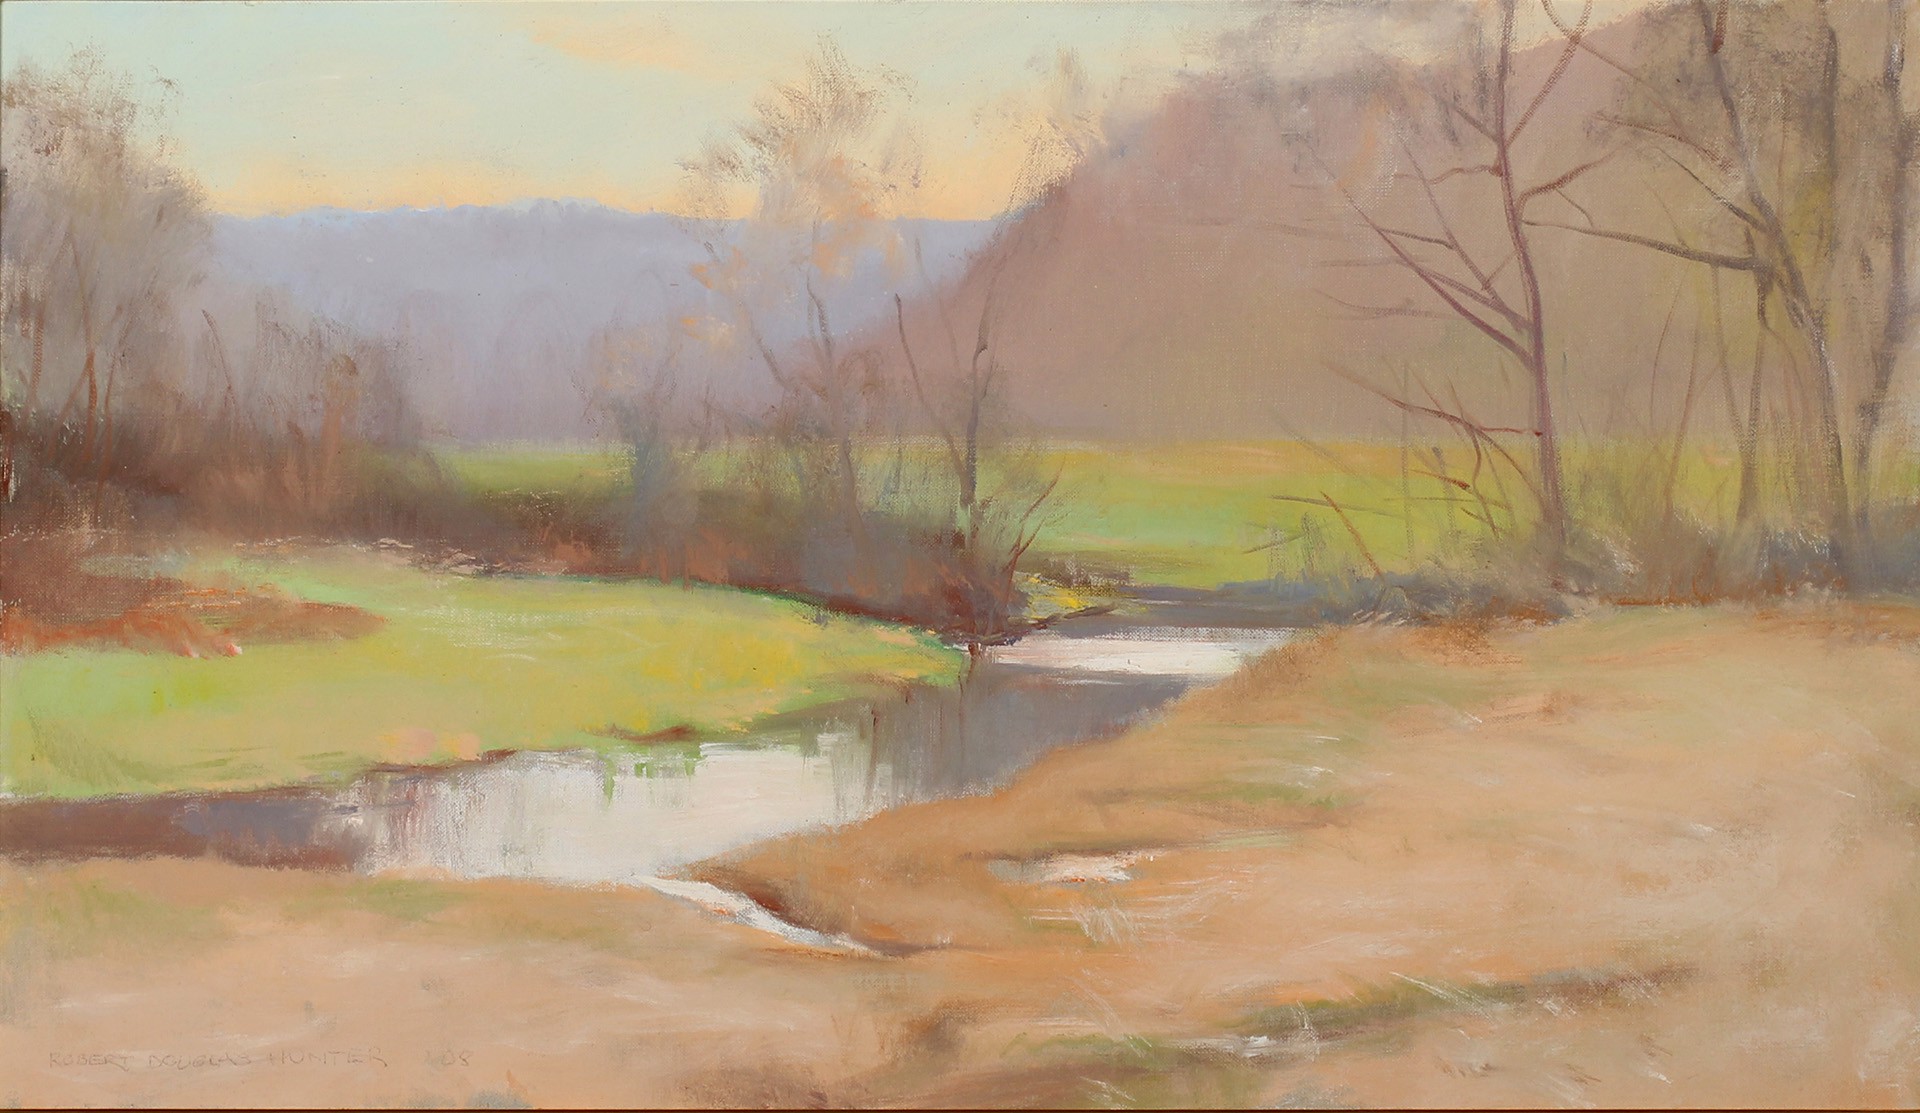 Stop River, Early April by Robert Douglas Hunter